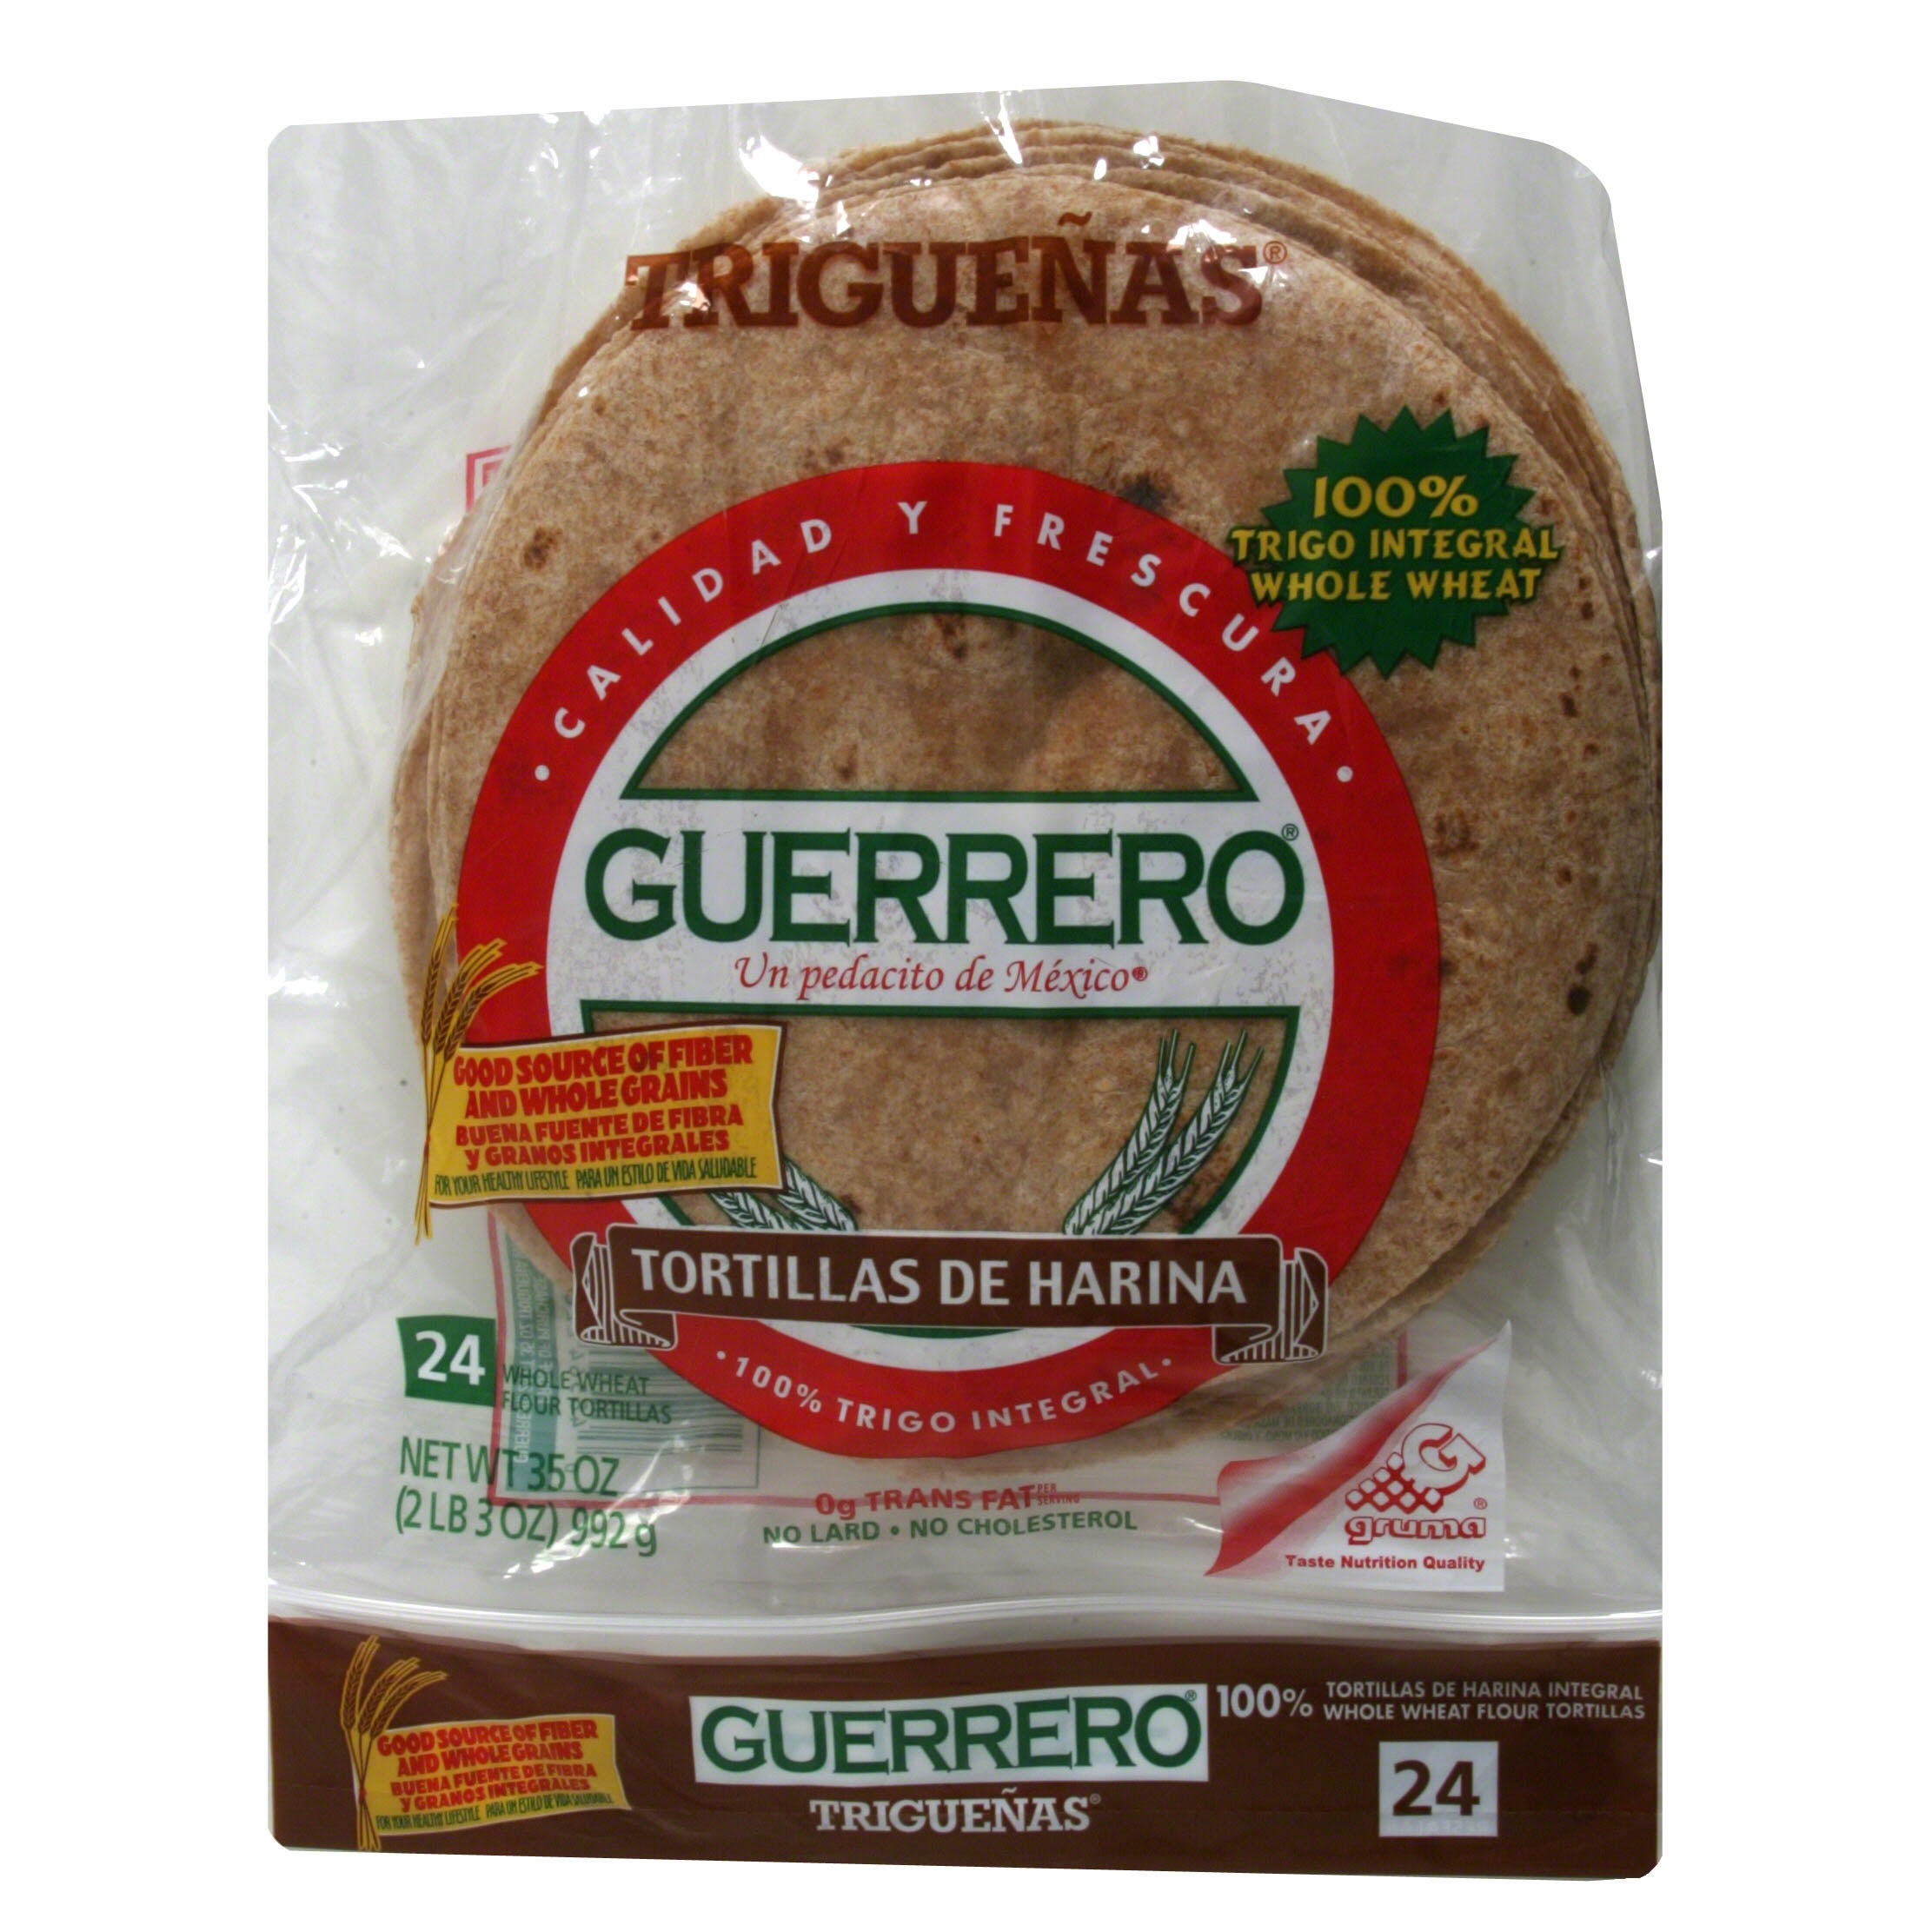 Guerrero Whole Wheat Tortillas - 24ct